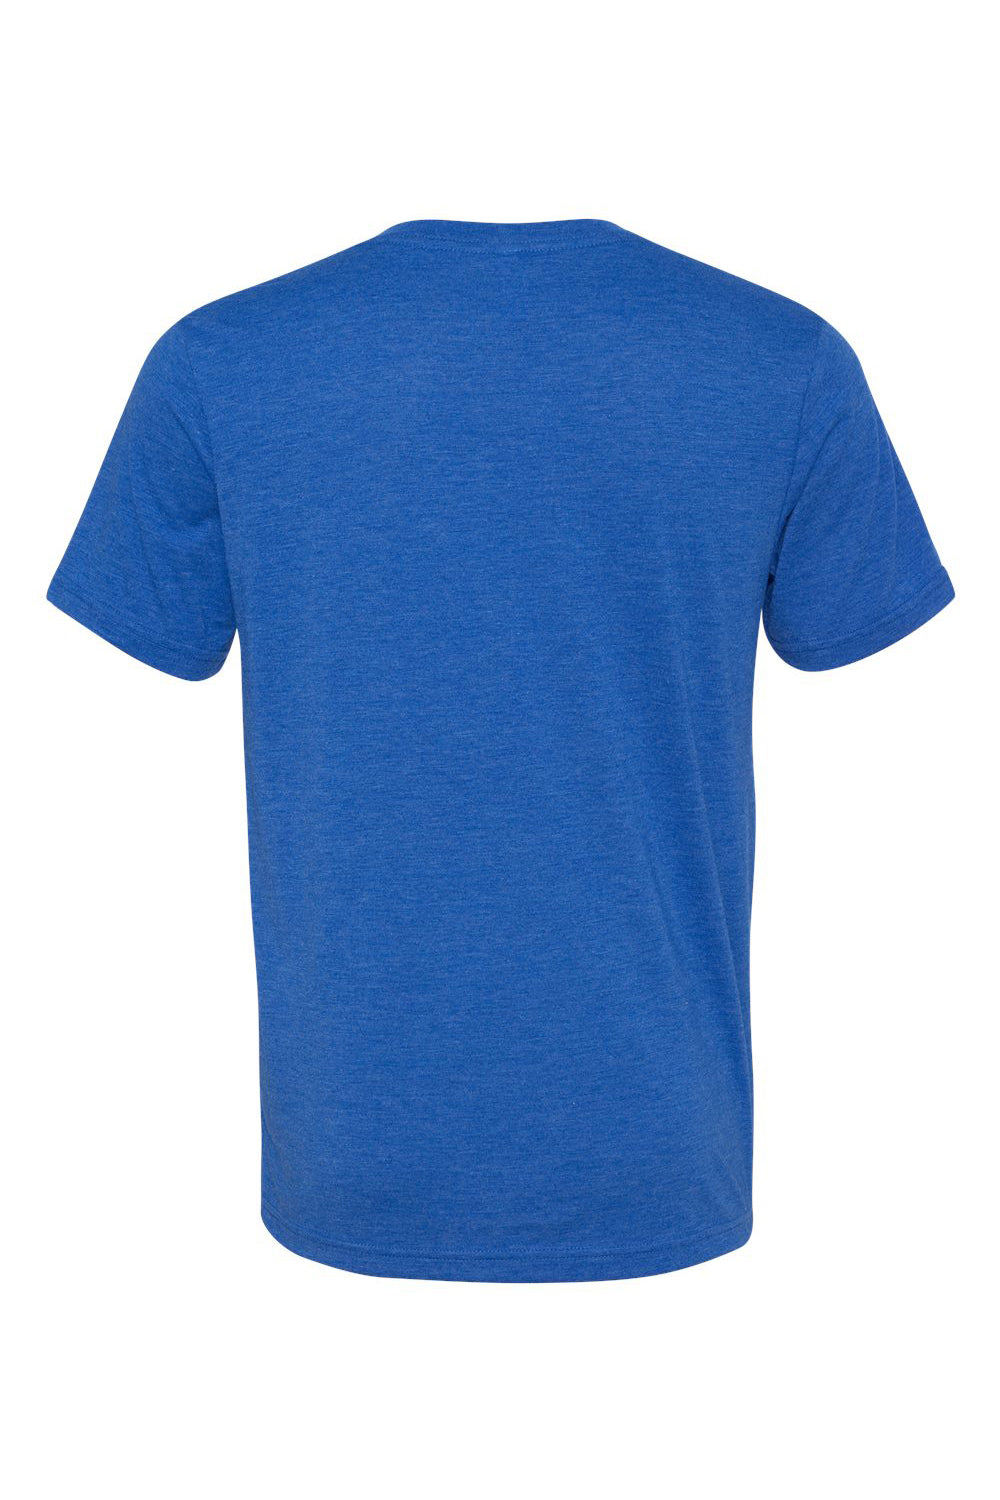 Bella + Canvas BC3415/3415C/3415 Mens Short Sleeve V-Neck T-Shirt True Royal Blue Flat Back